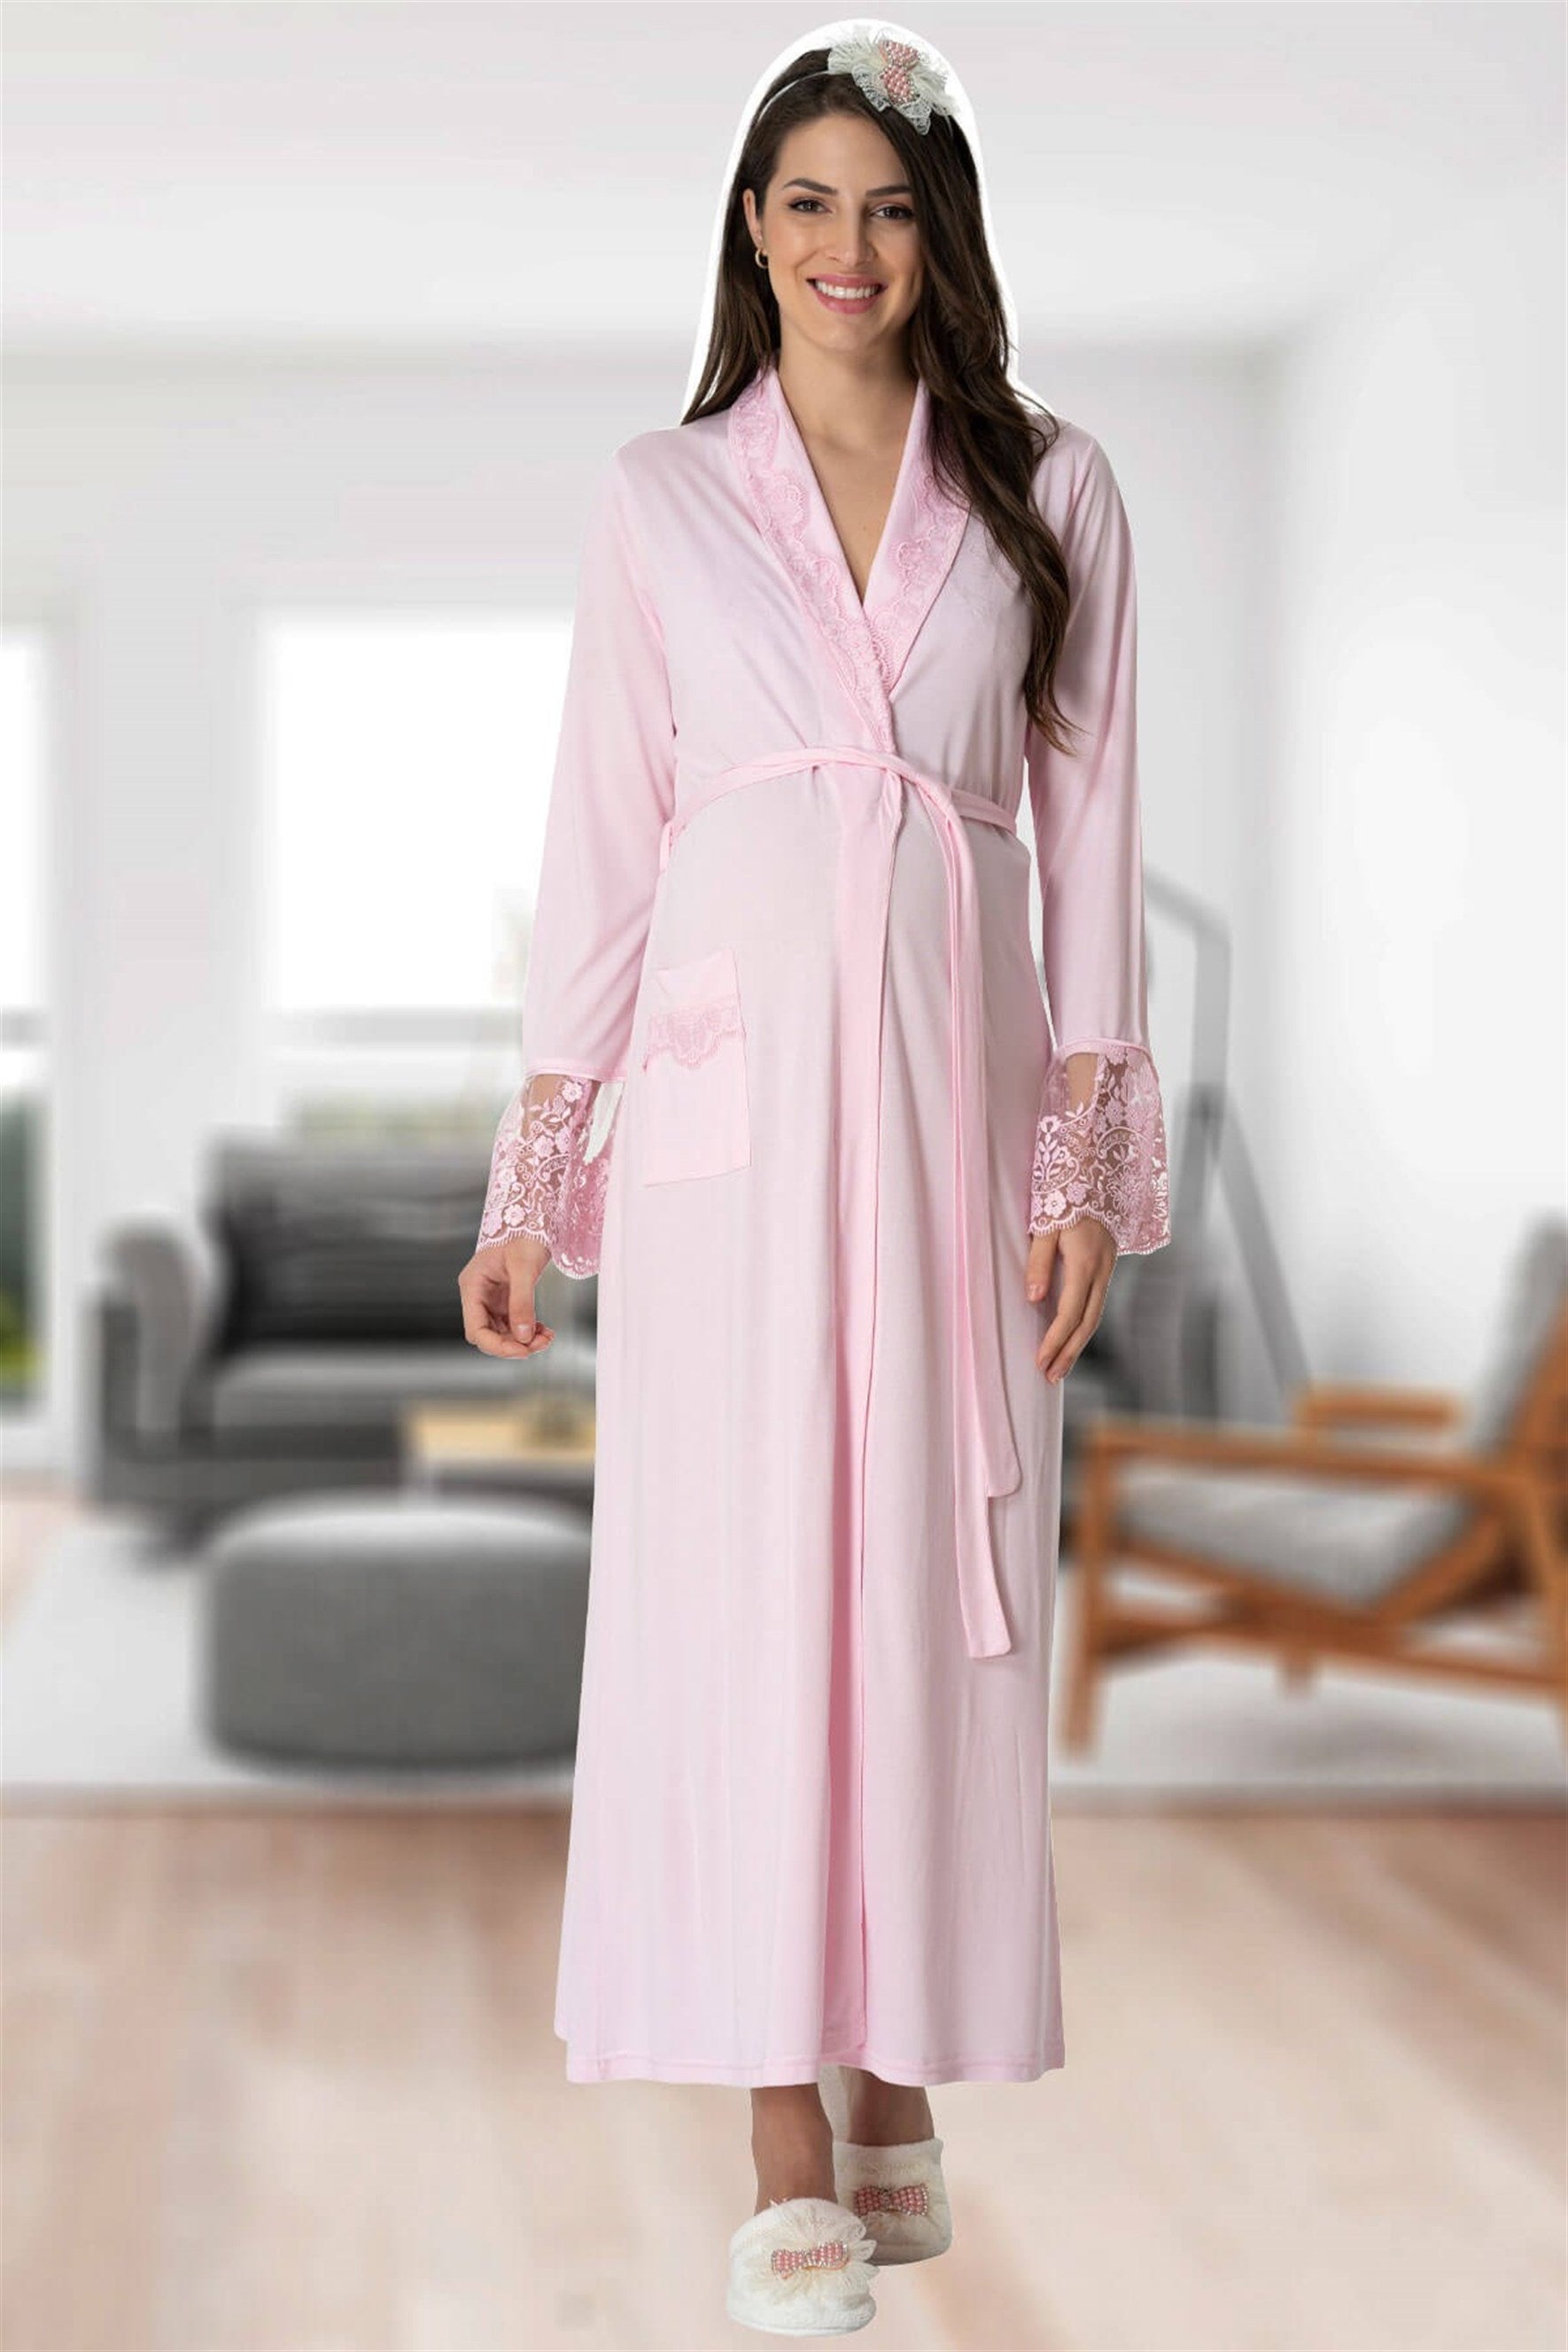 Shopymommy 5413 Elegant Lace Maternity Robe Pink